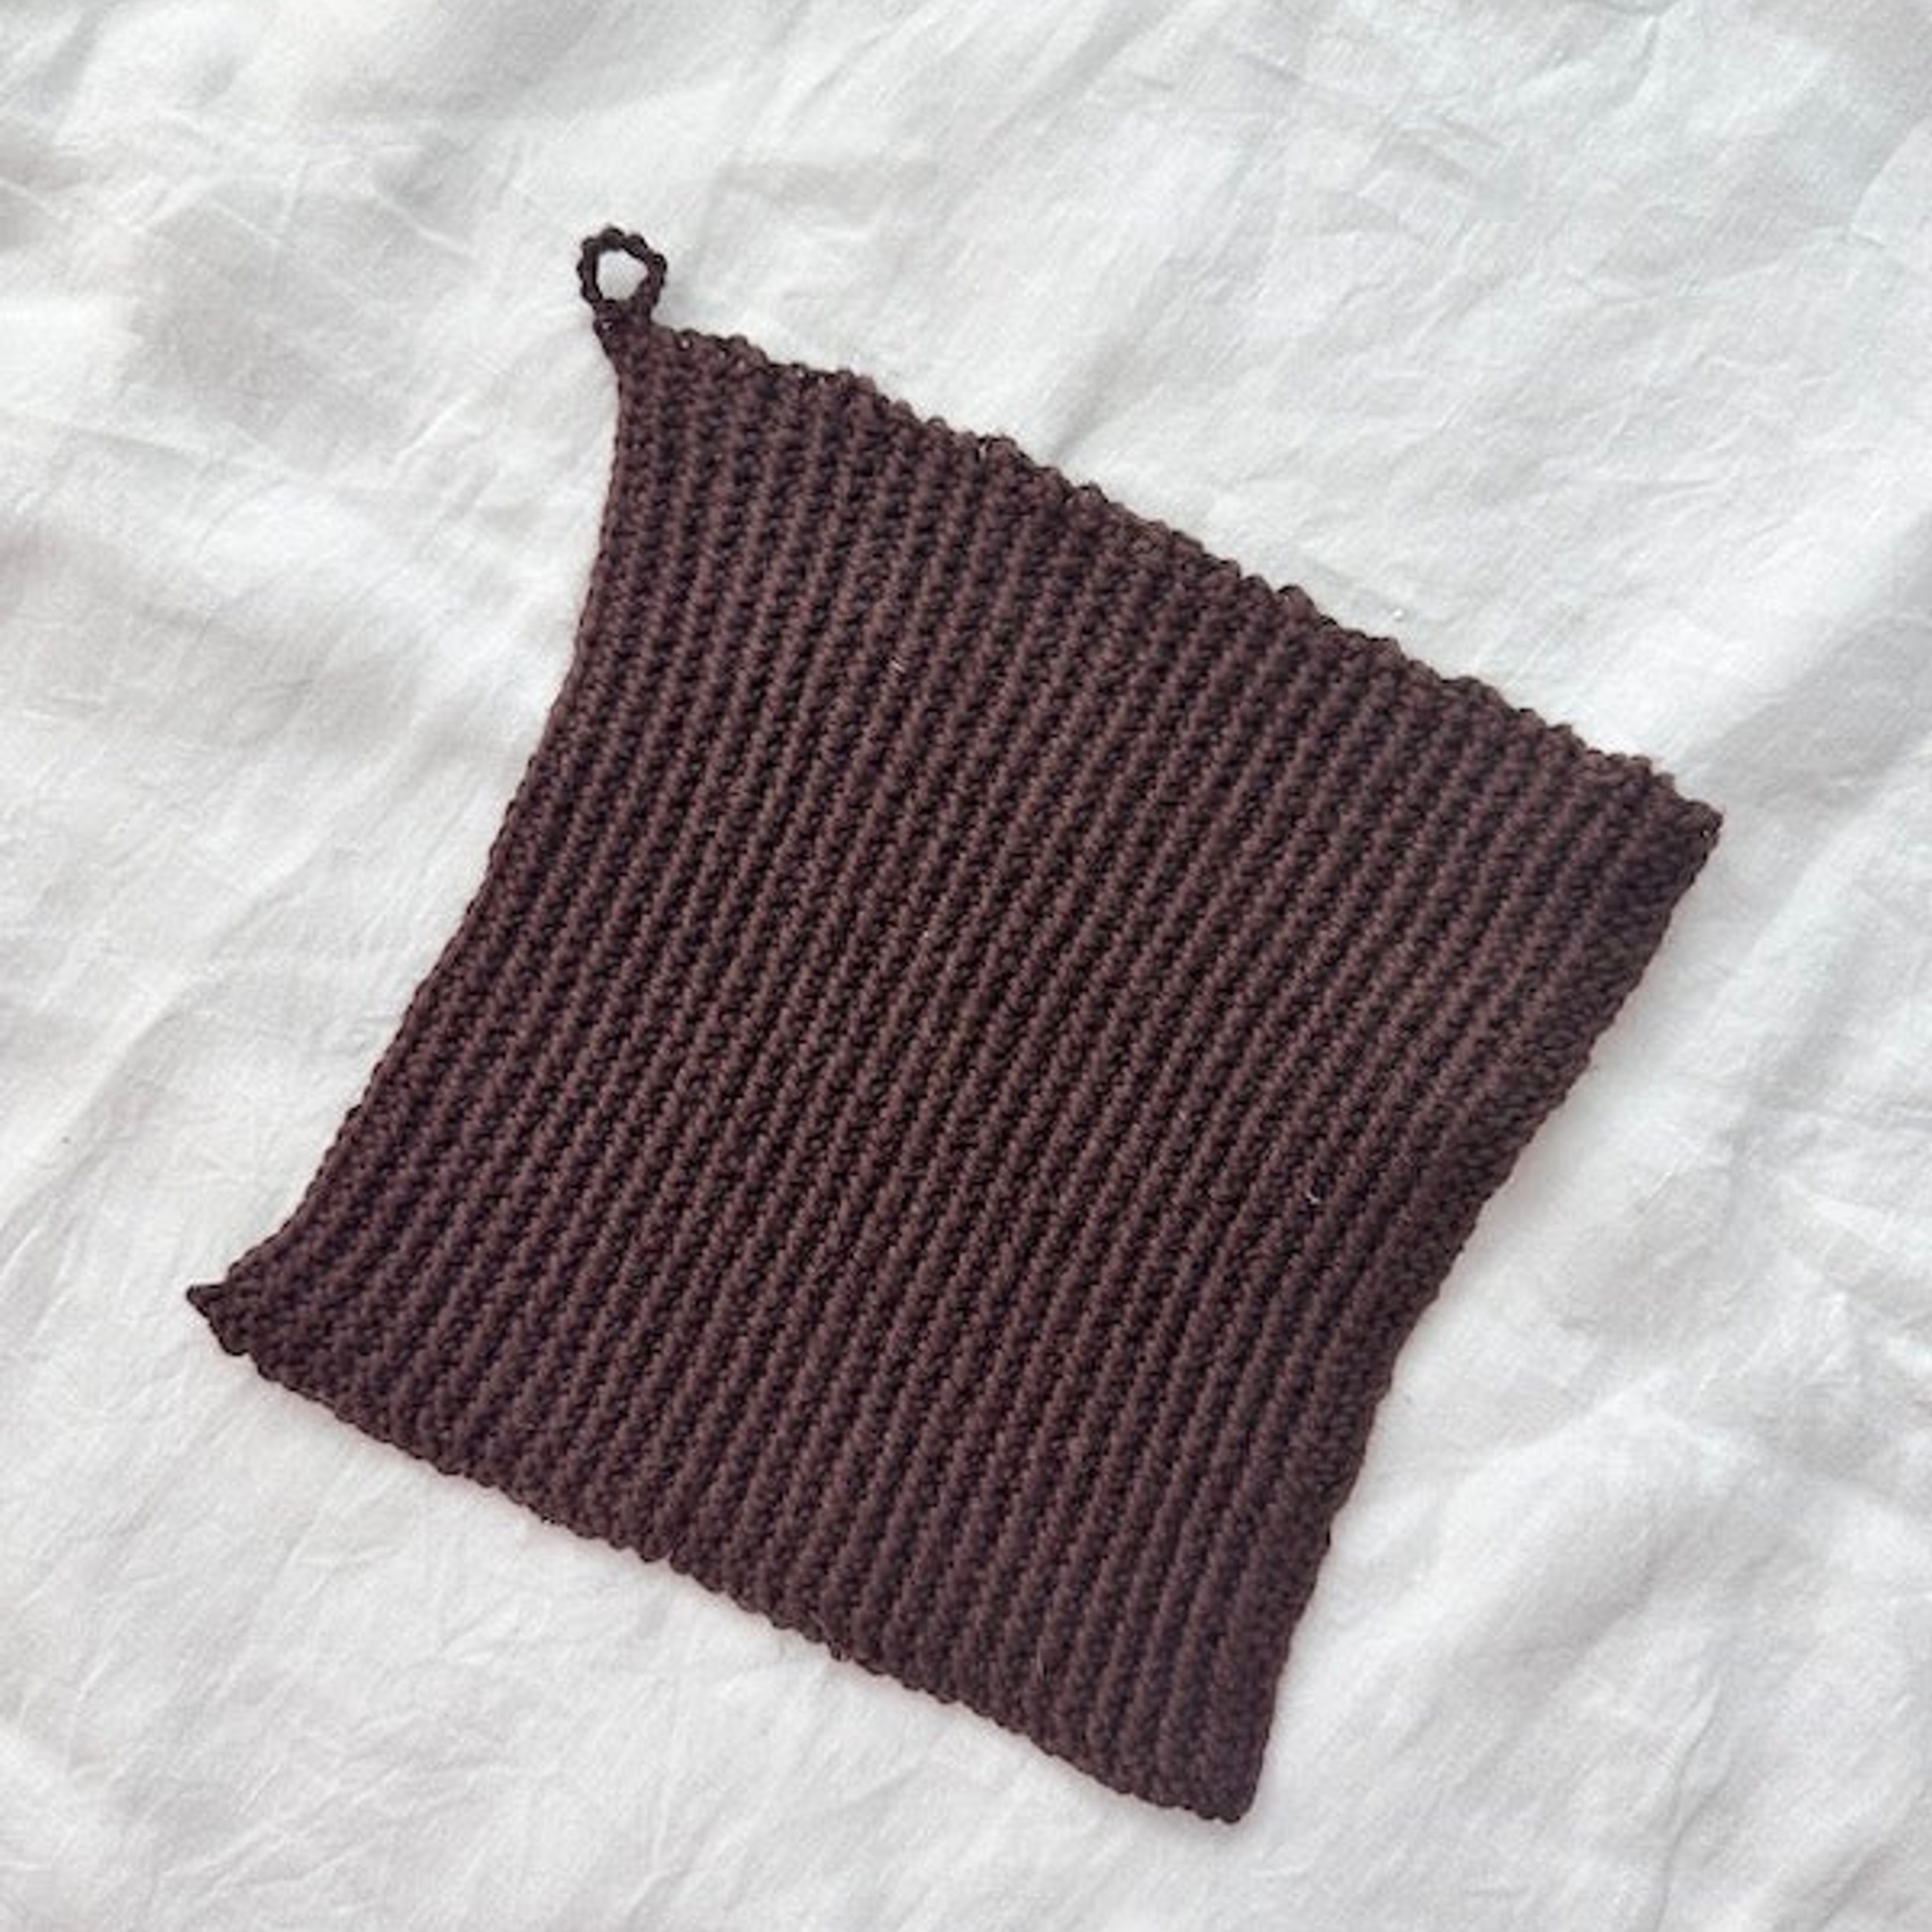 Cotton/Linen Hand Knit Washcloth (6 Color Options)